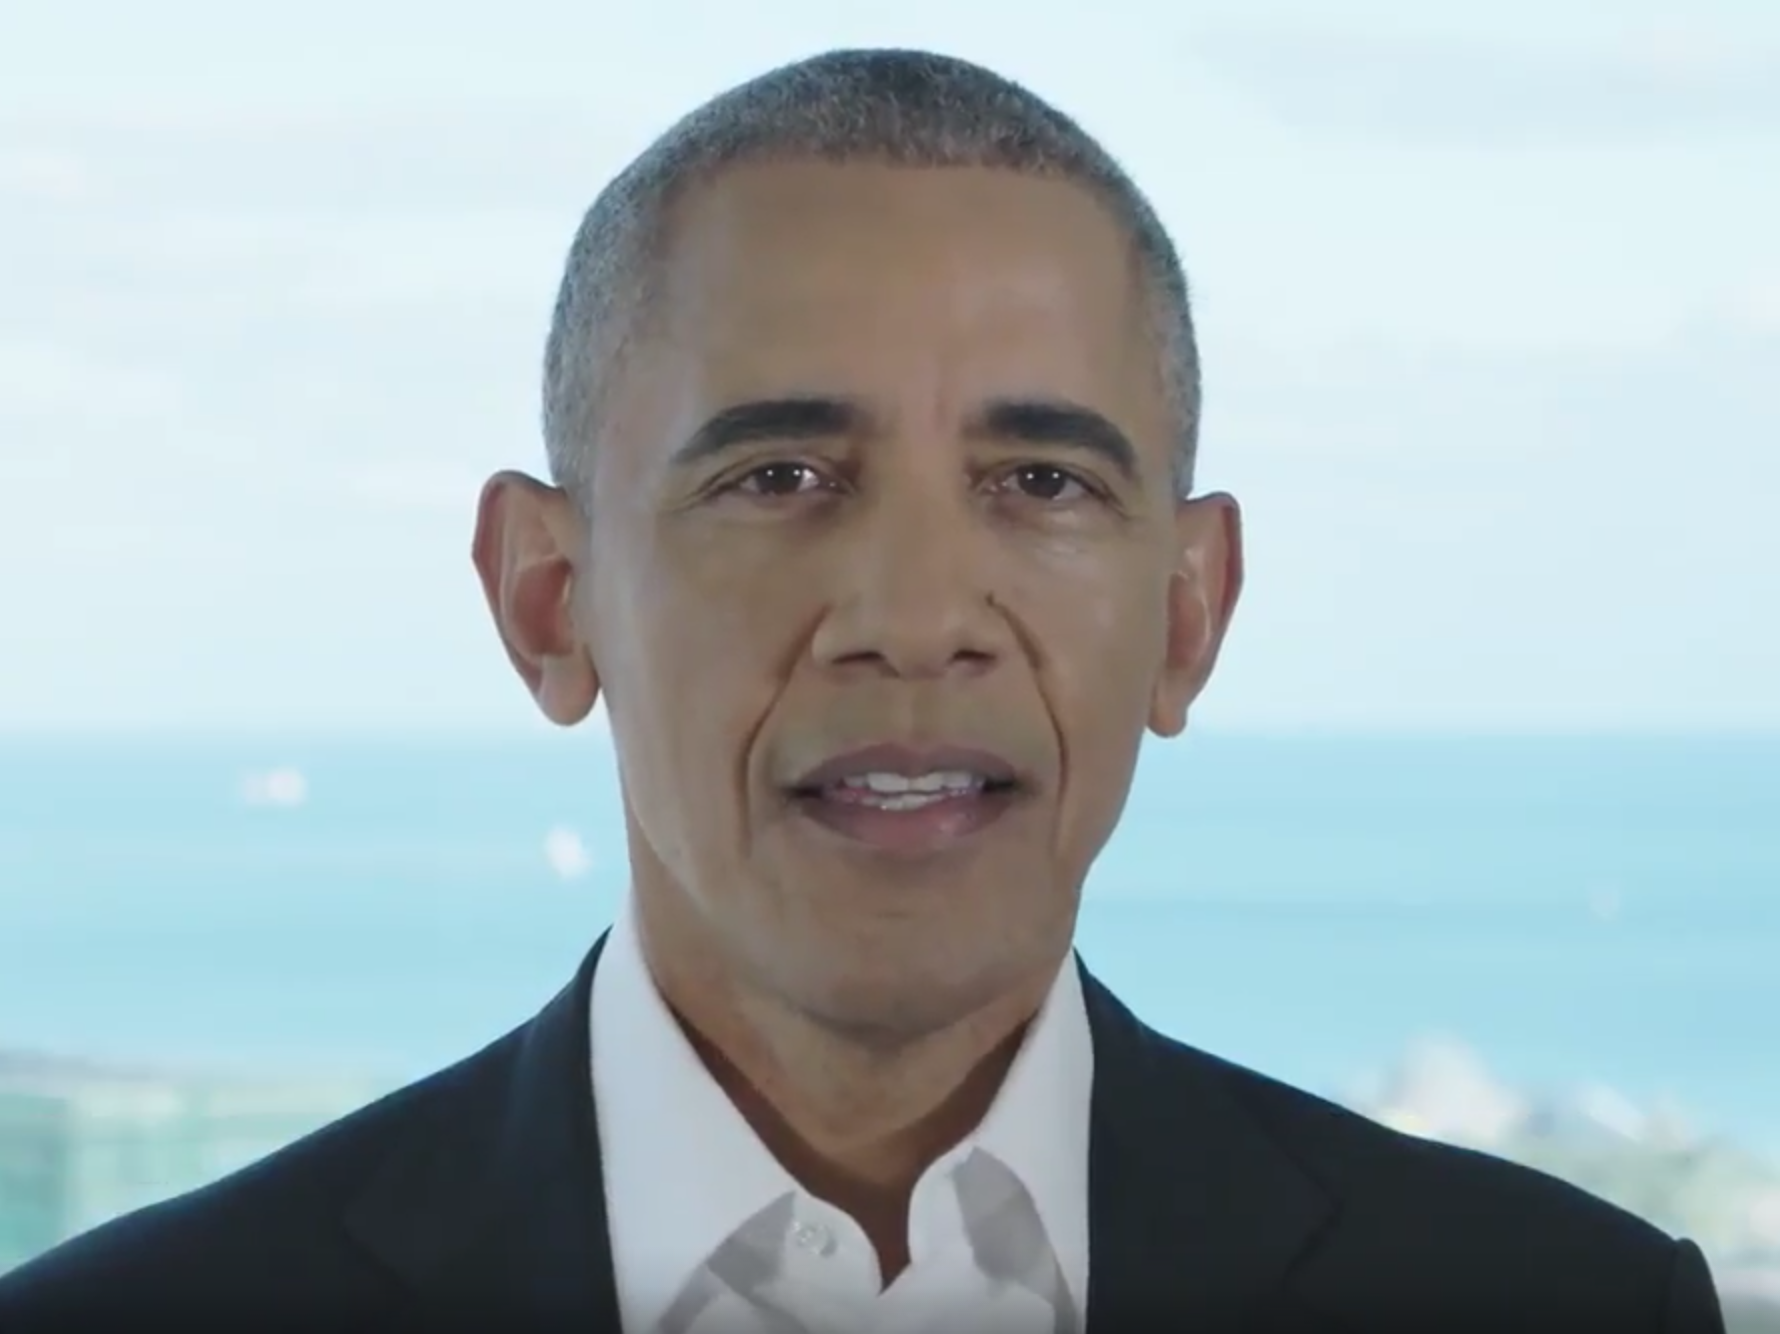 Former President Barack Obama stars in a video promoting enrollment in the Obamacare insurance markets